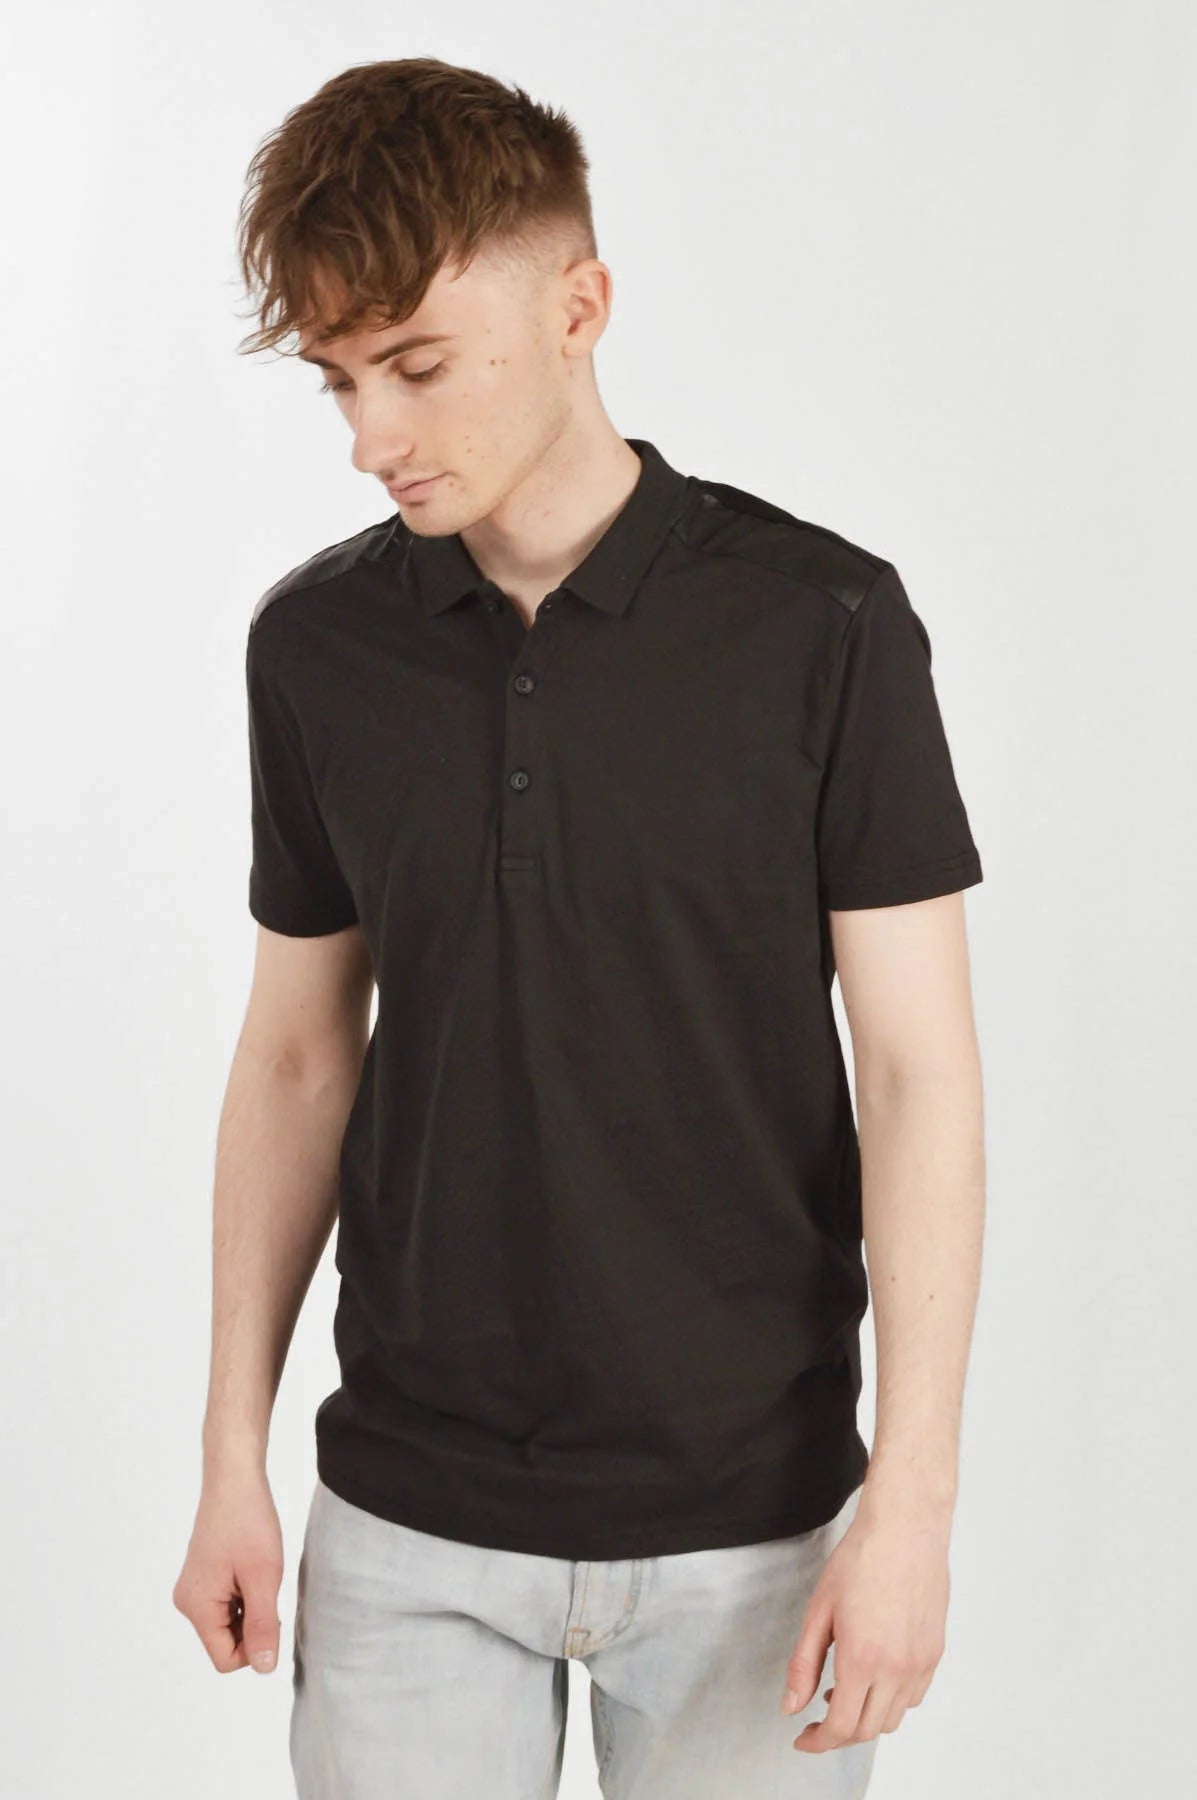 River Island Polo Shirt Contrast Shoulder Black / S